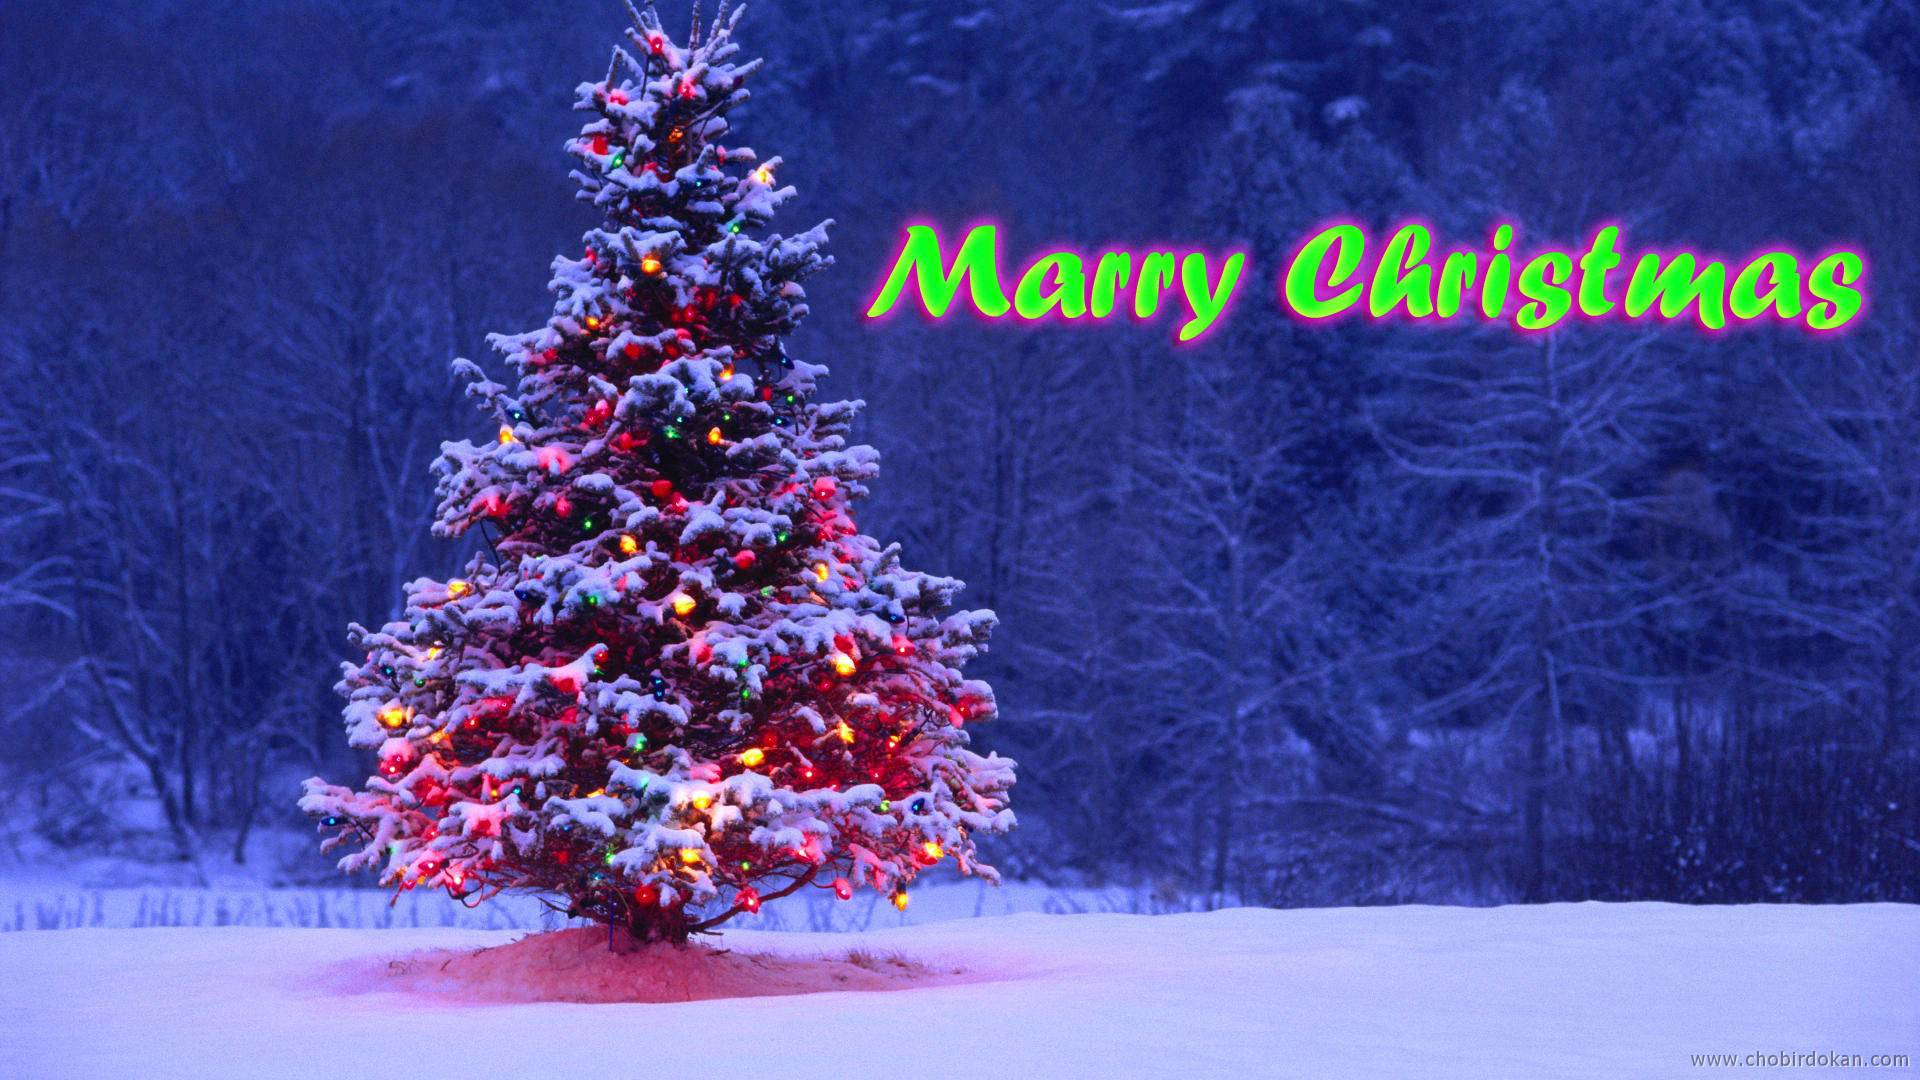 Christmas Merry Tree Image Background